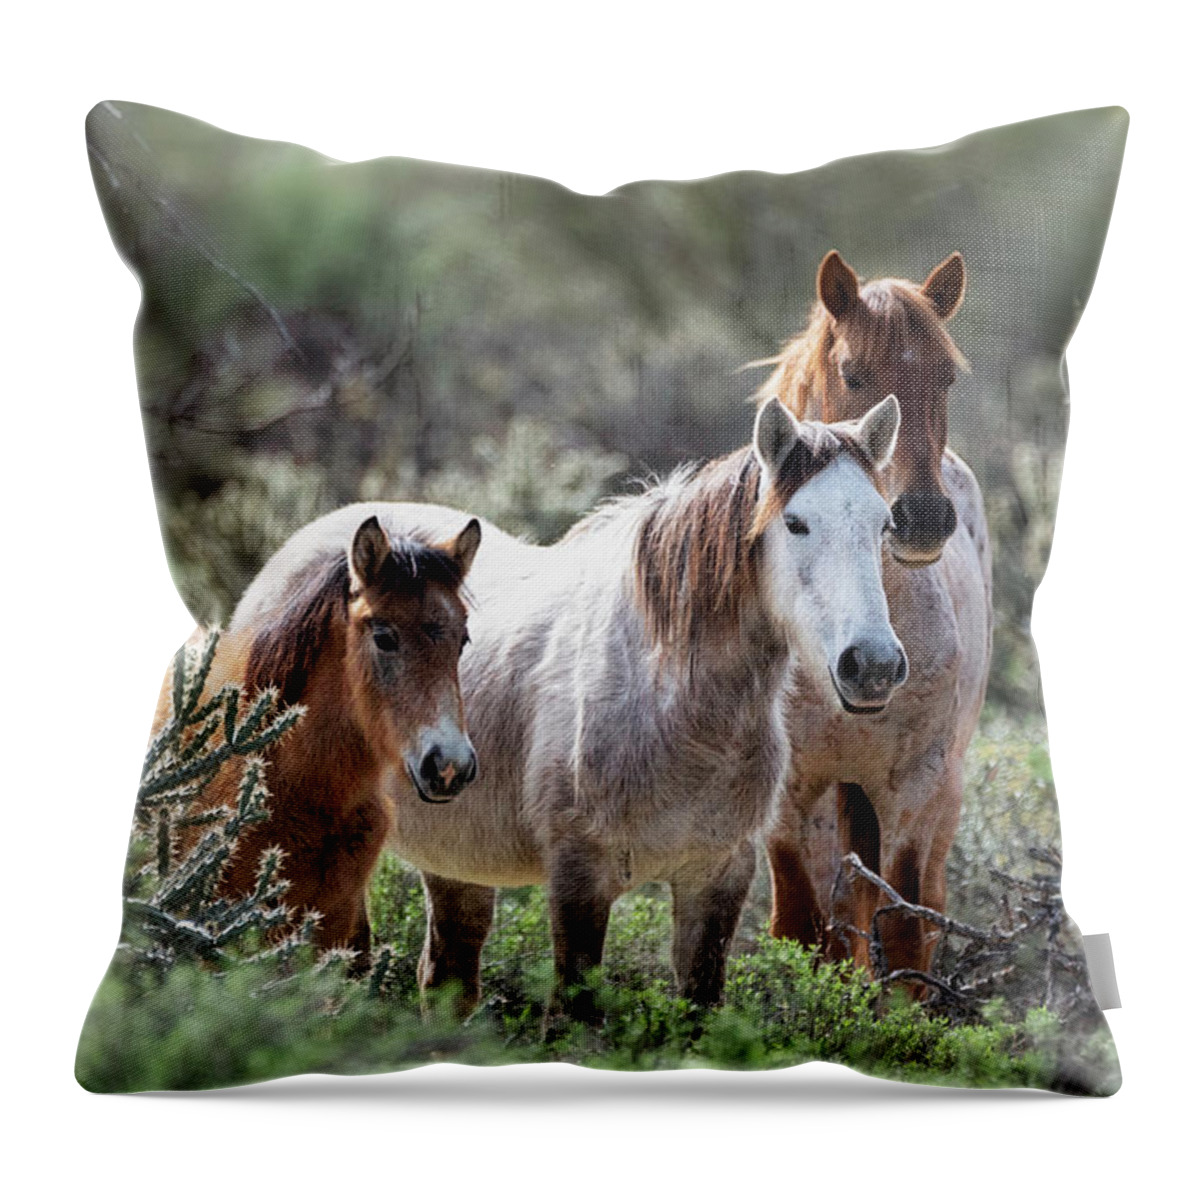 Wild Horses Throw Pillow featuring the photograph Family Bonds by Saija Lehtonen